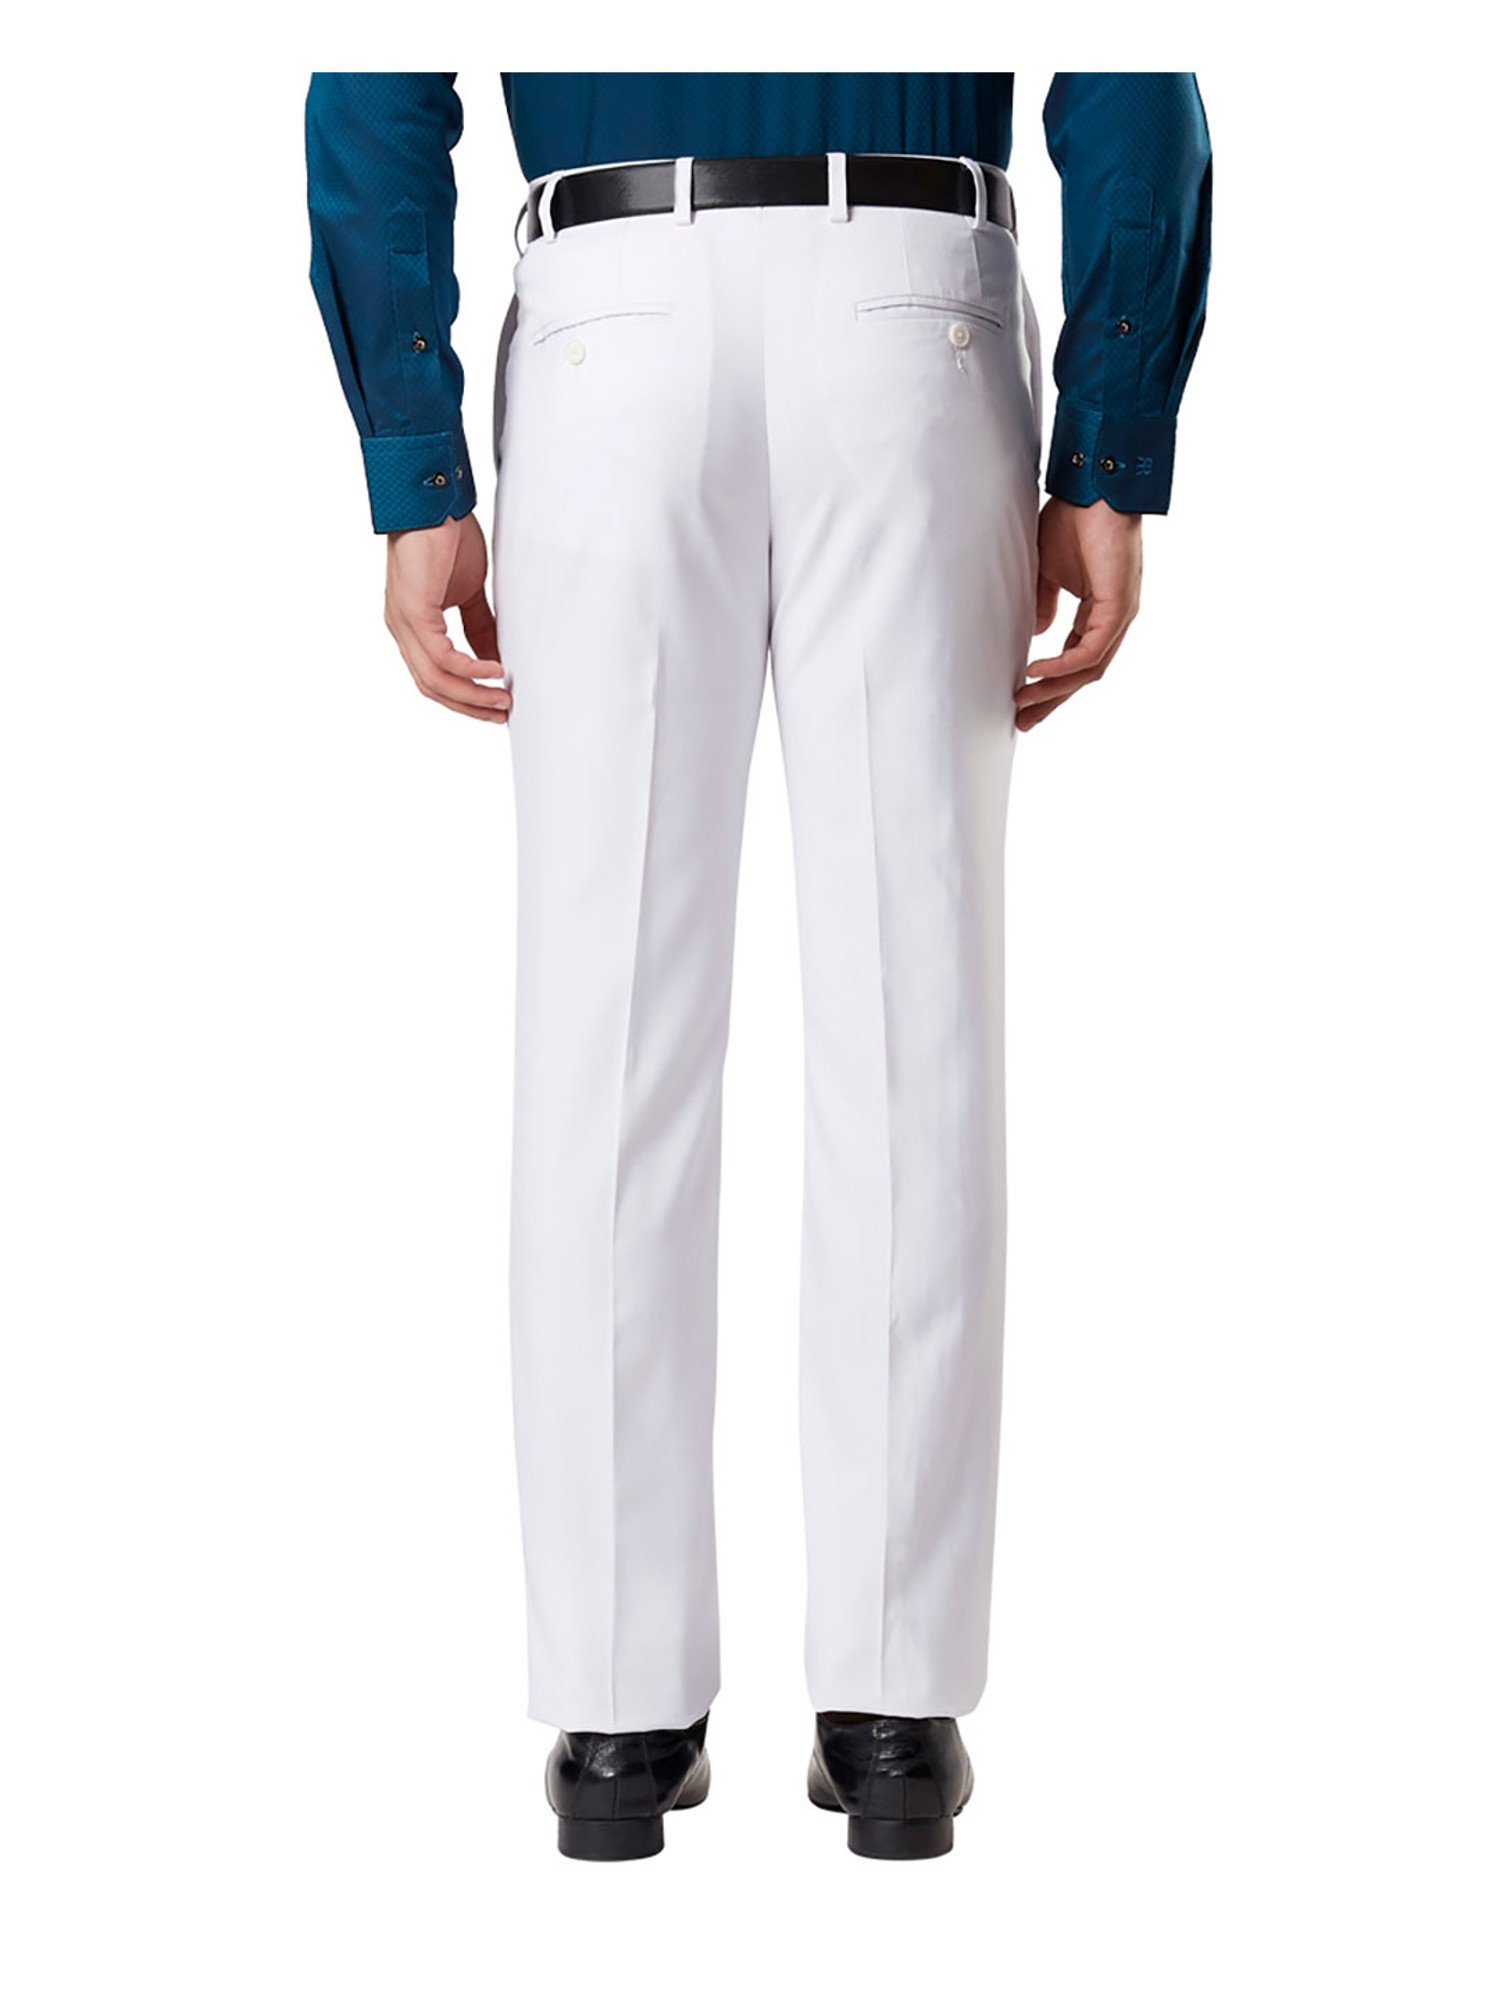 Abelino  Mens Linen Trousers  White Trousers for Men  Yellwithus  Yell   Unisexx Fashion House